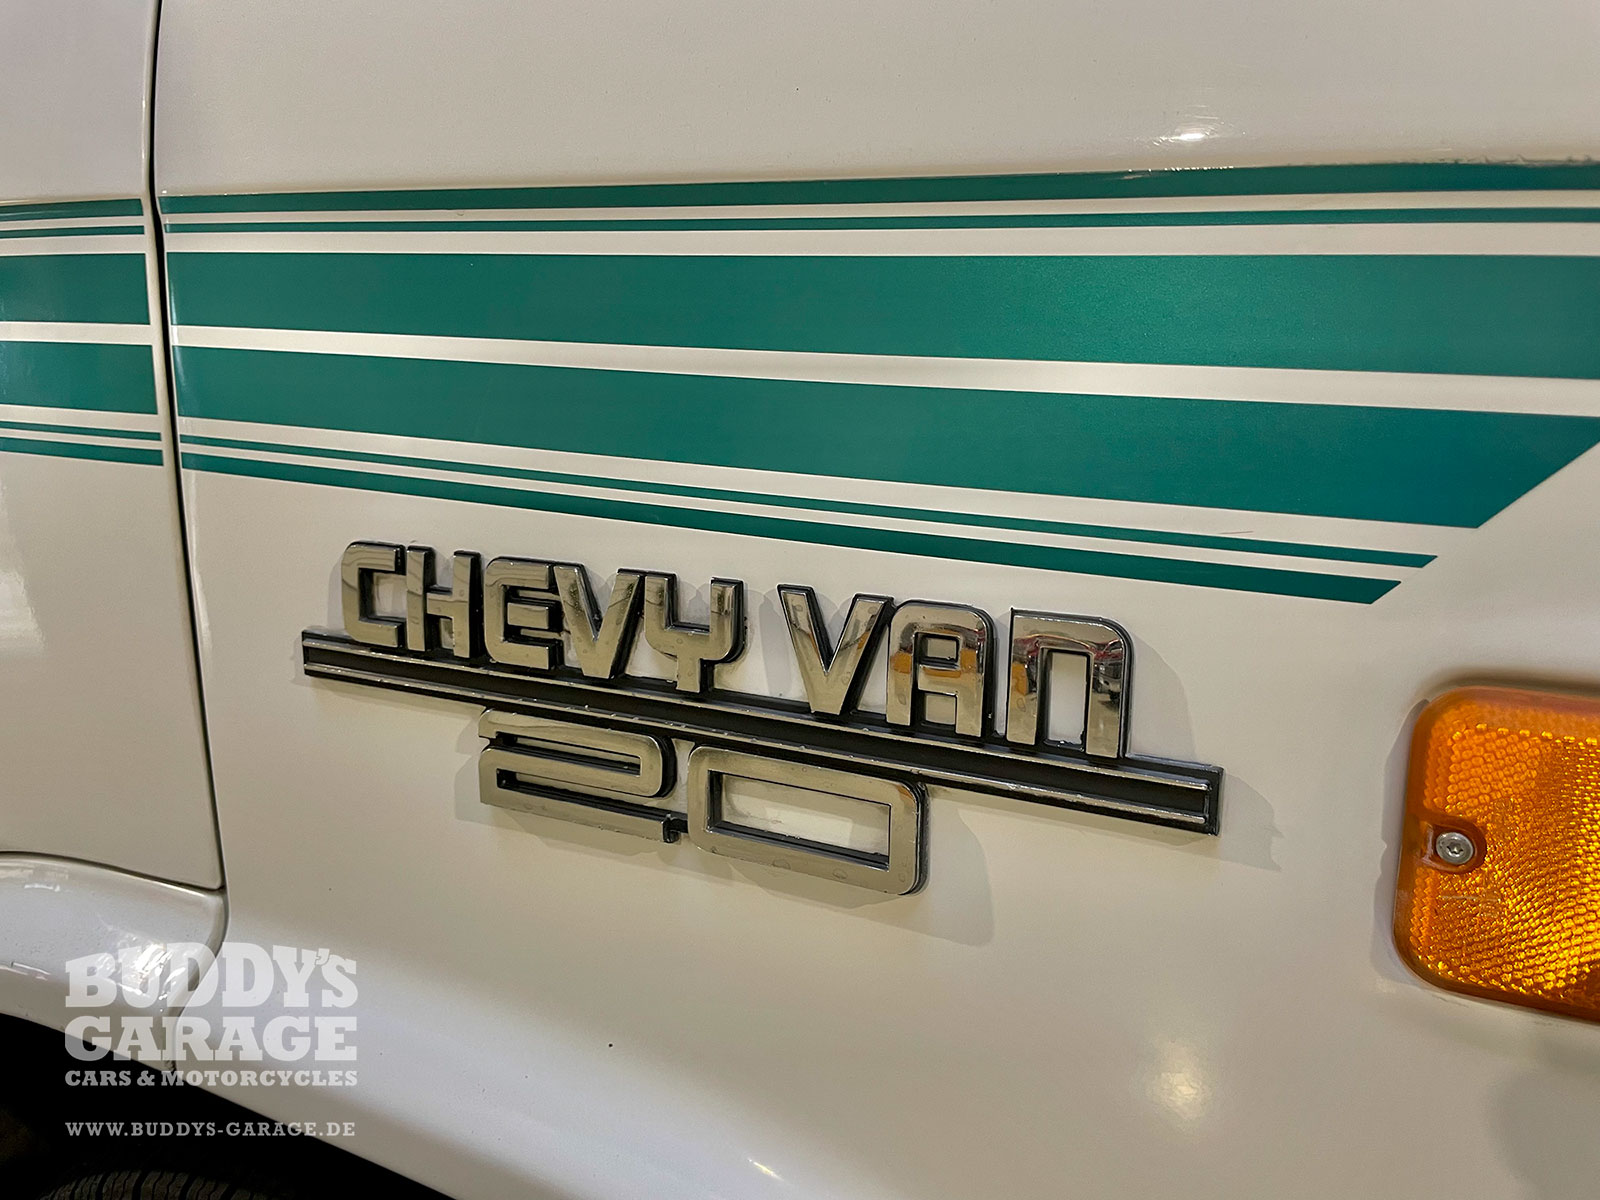 Chevrolet G20 Conversion Van 1992 | Buddy's Garage Bad Oeynhausen